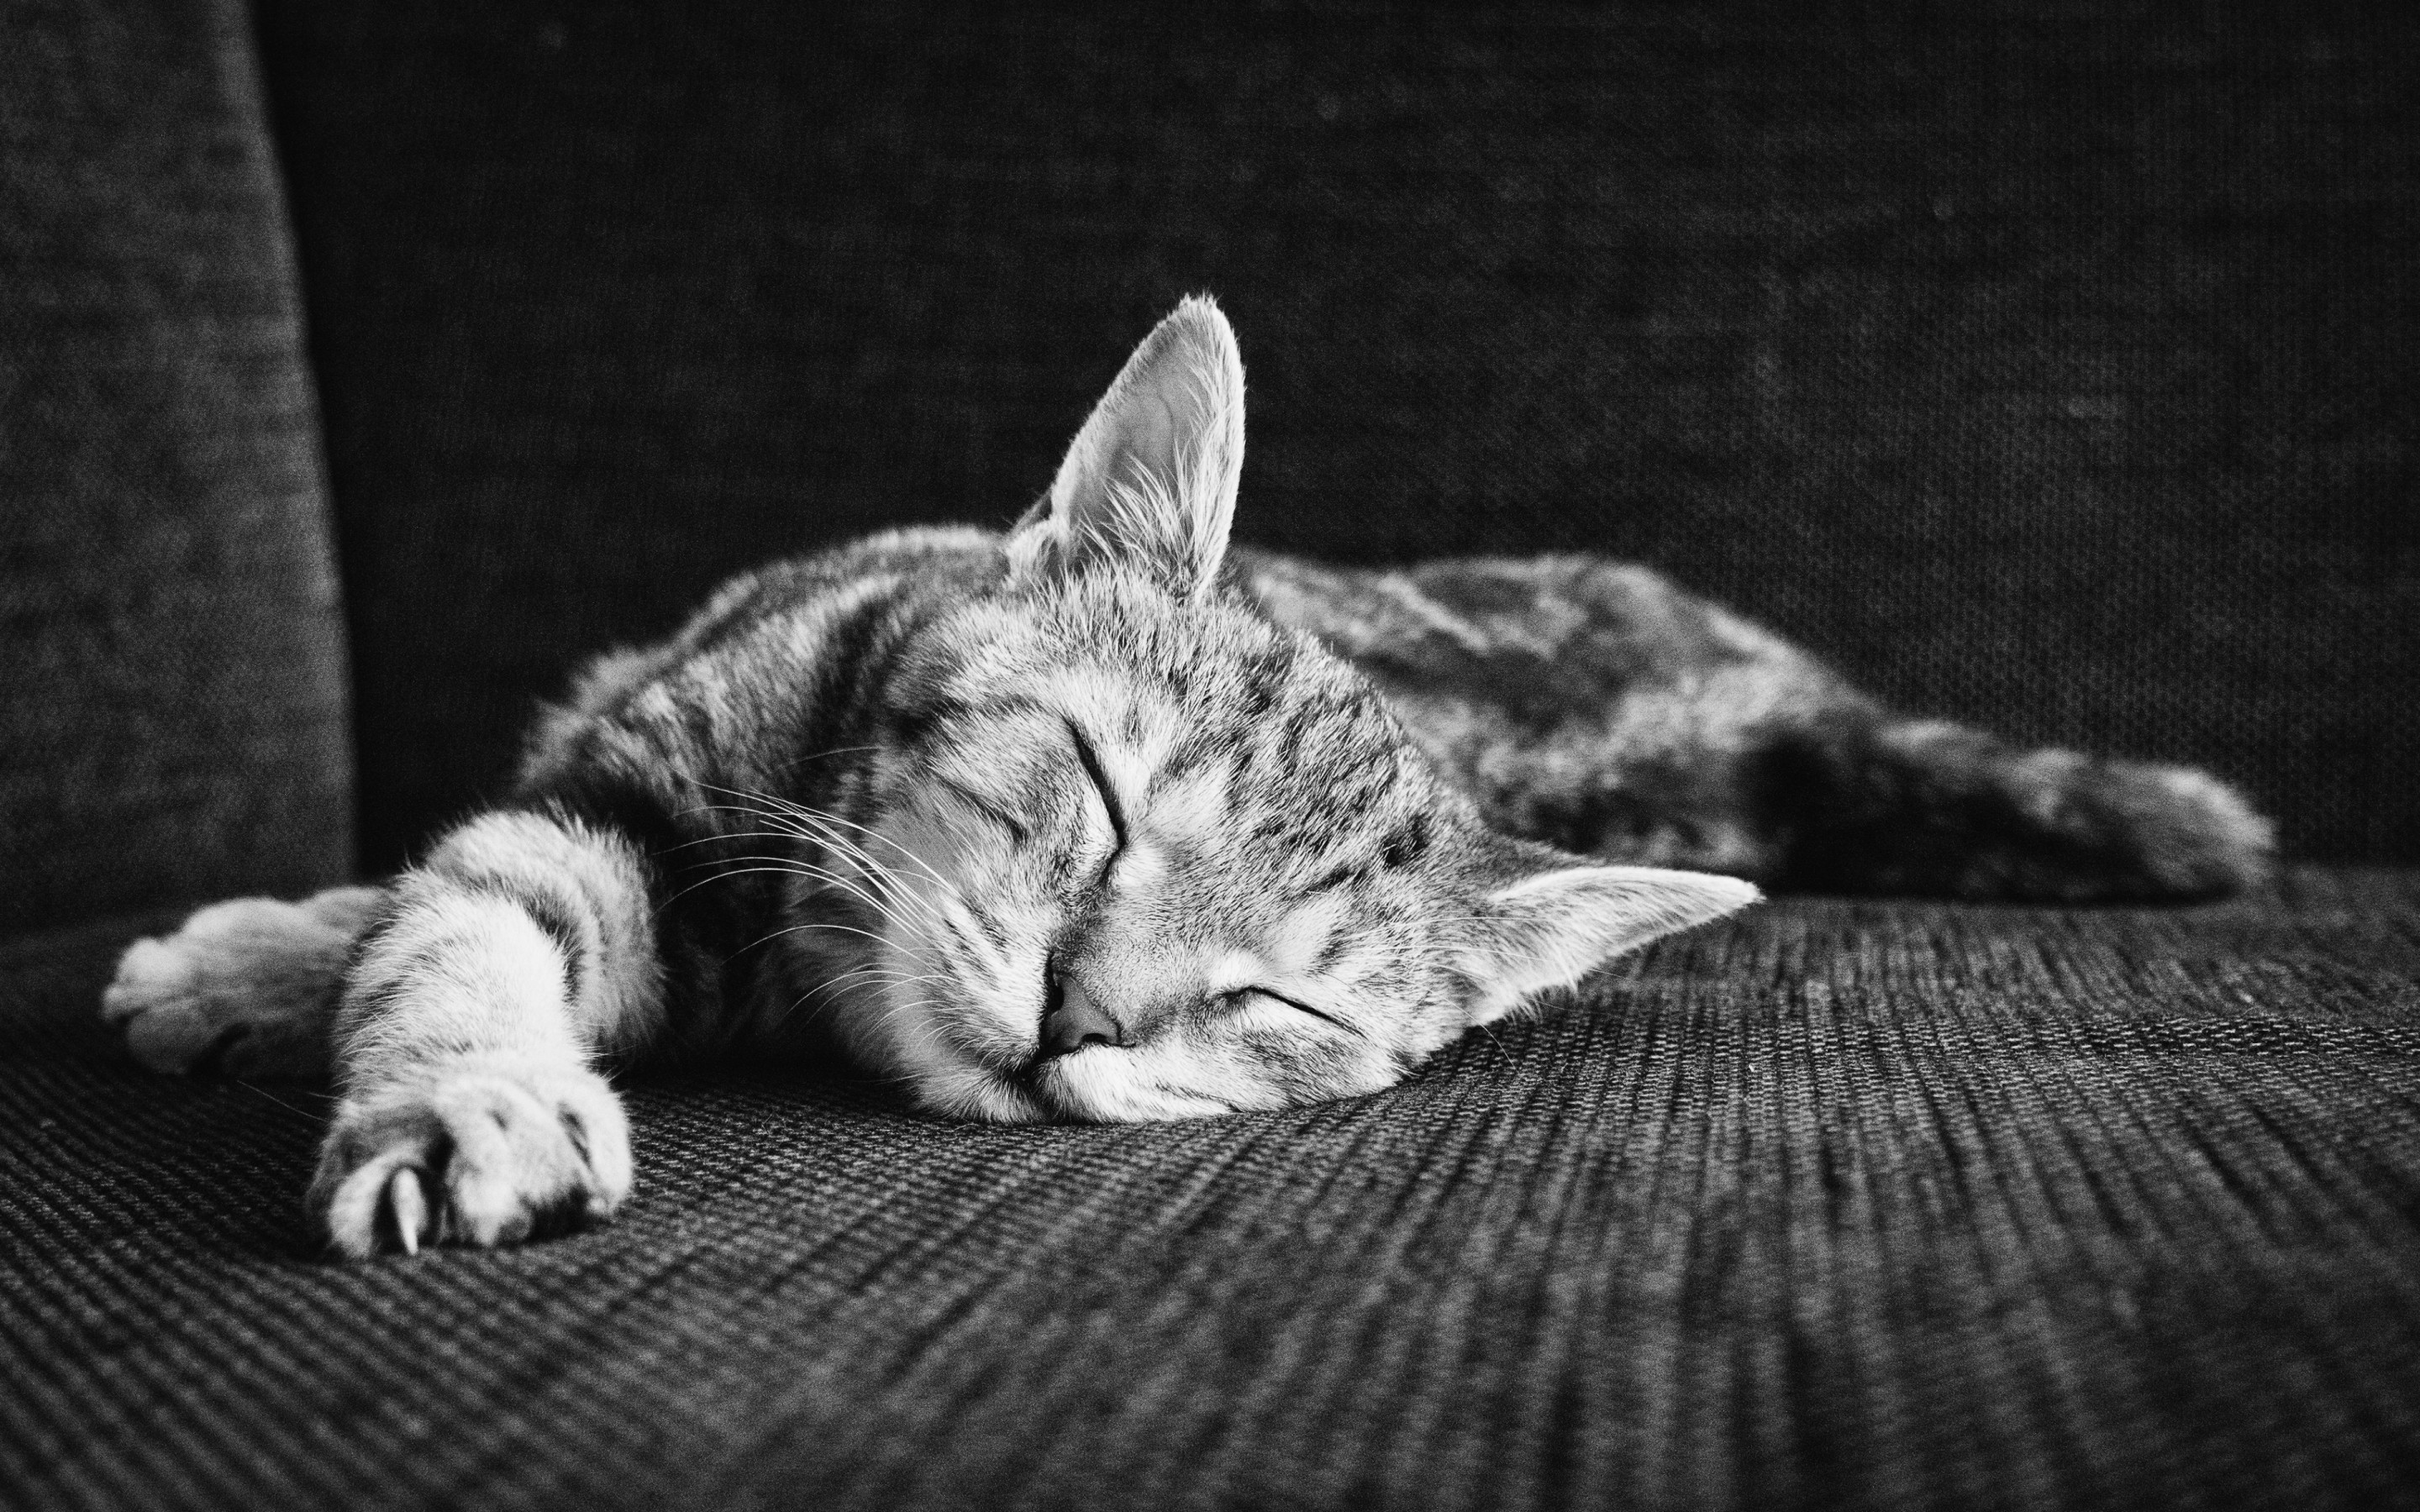 Zen of sleeping kitten wallpaper 2880x1800